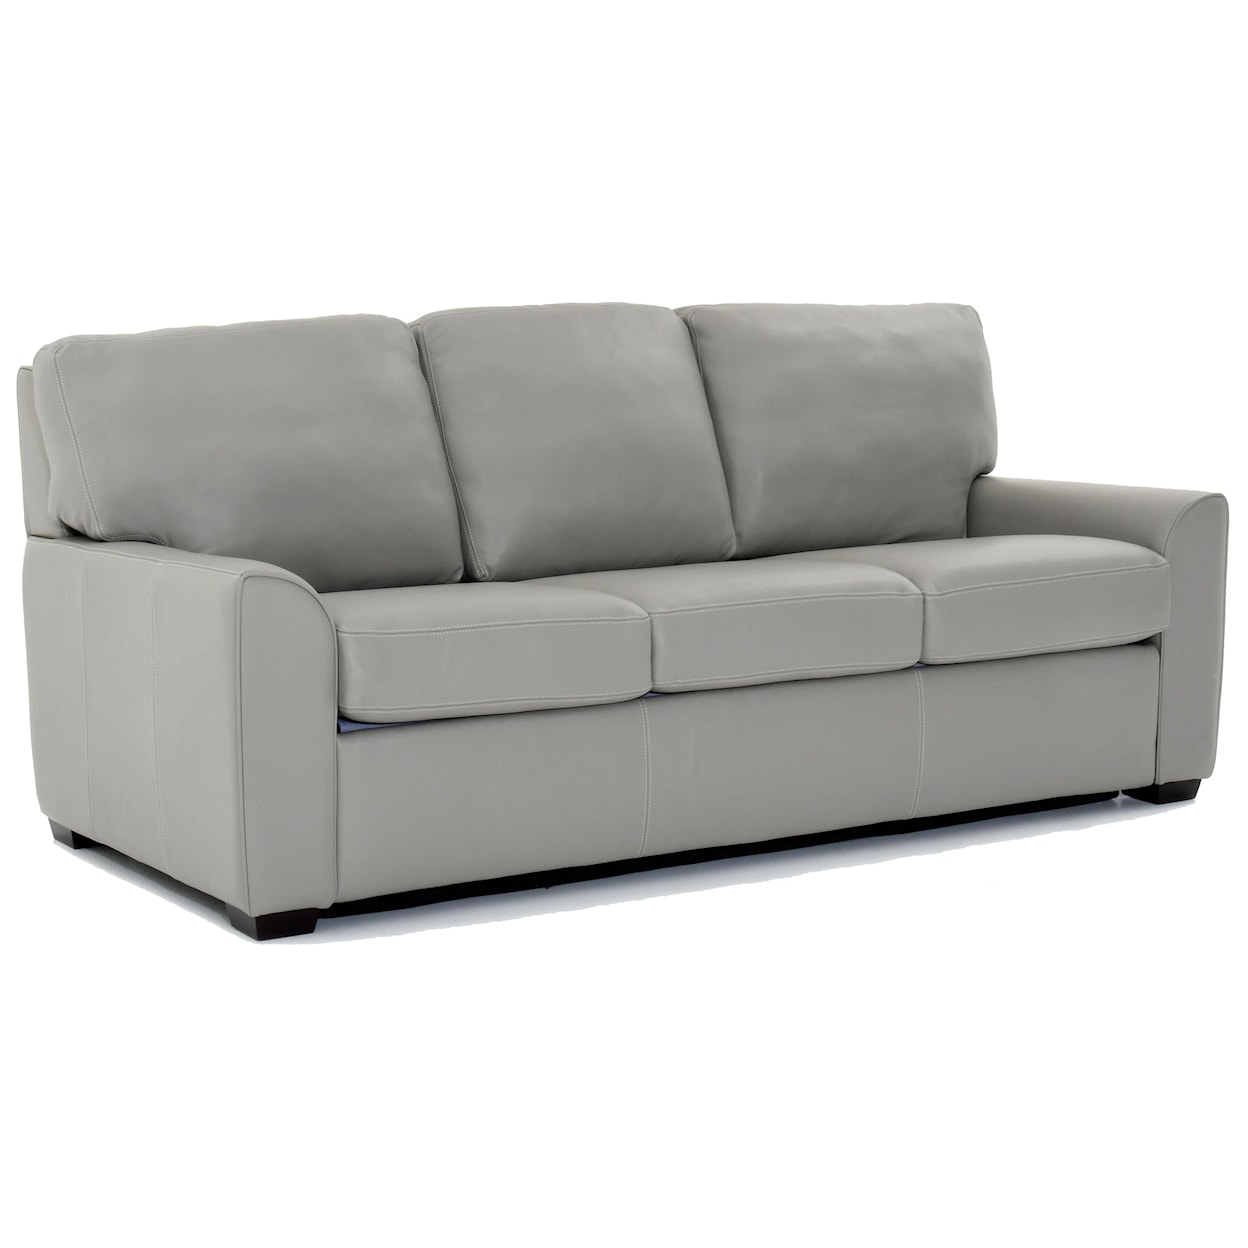 American Leather Klein Queen Sleeper Sofa